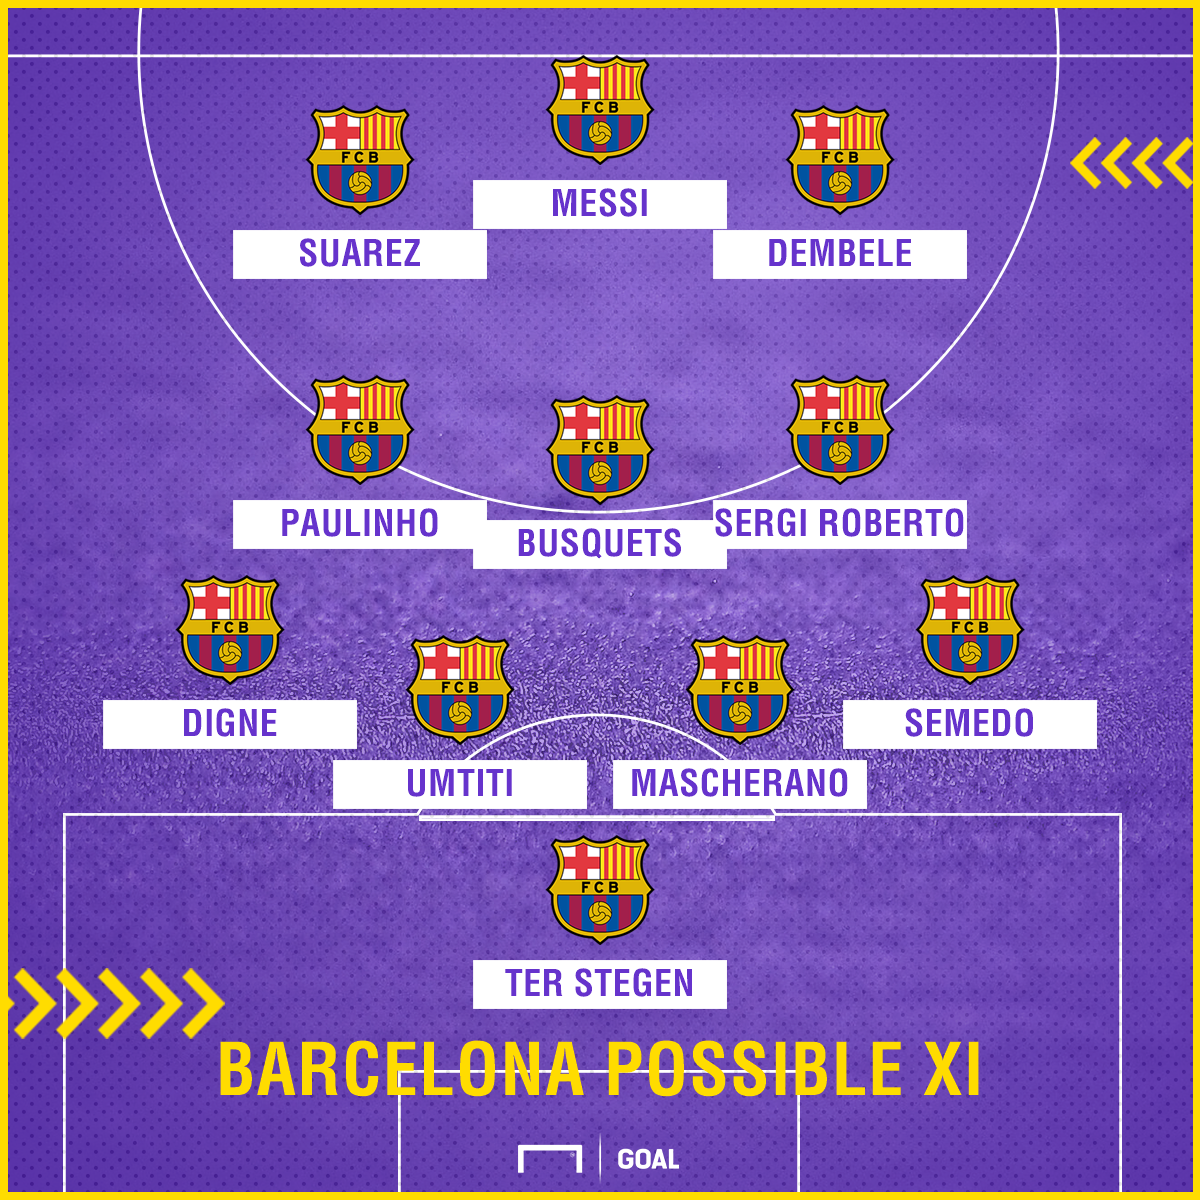 Barcelona Team News: Injuries, suspensions and line-up vs Getafe | Goal.com